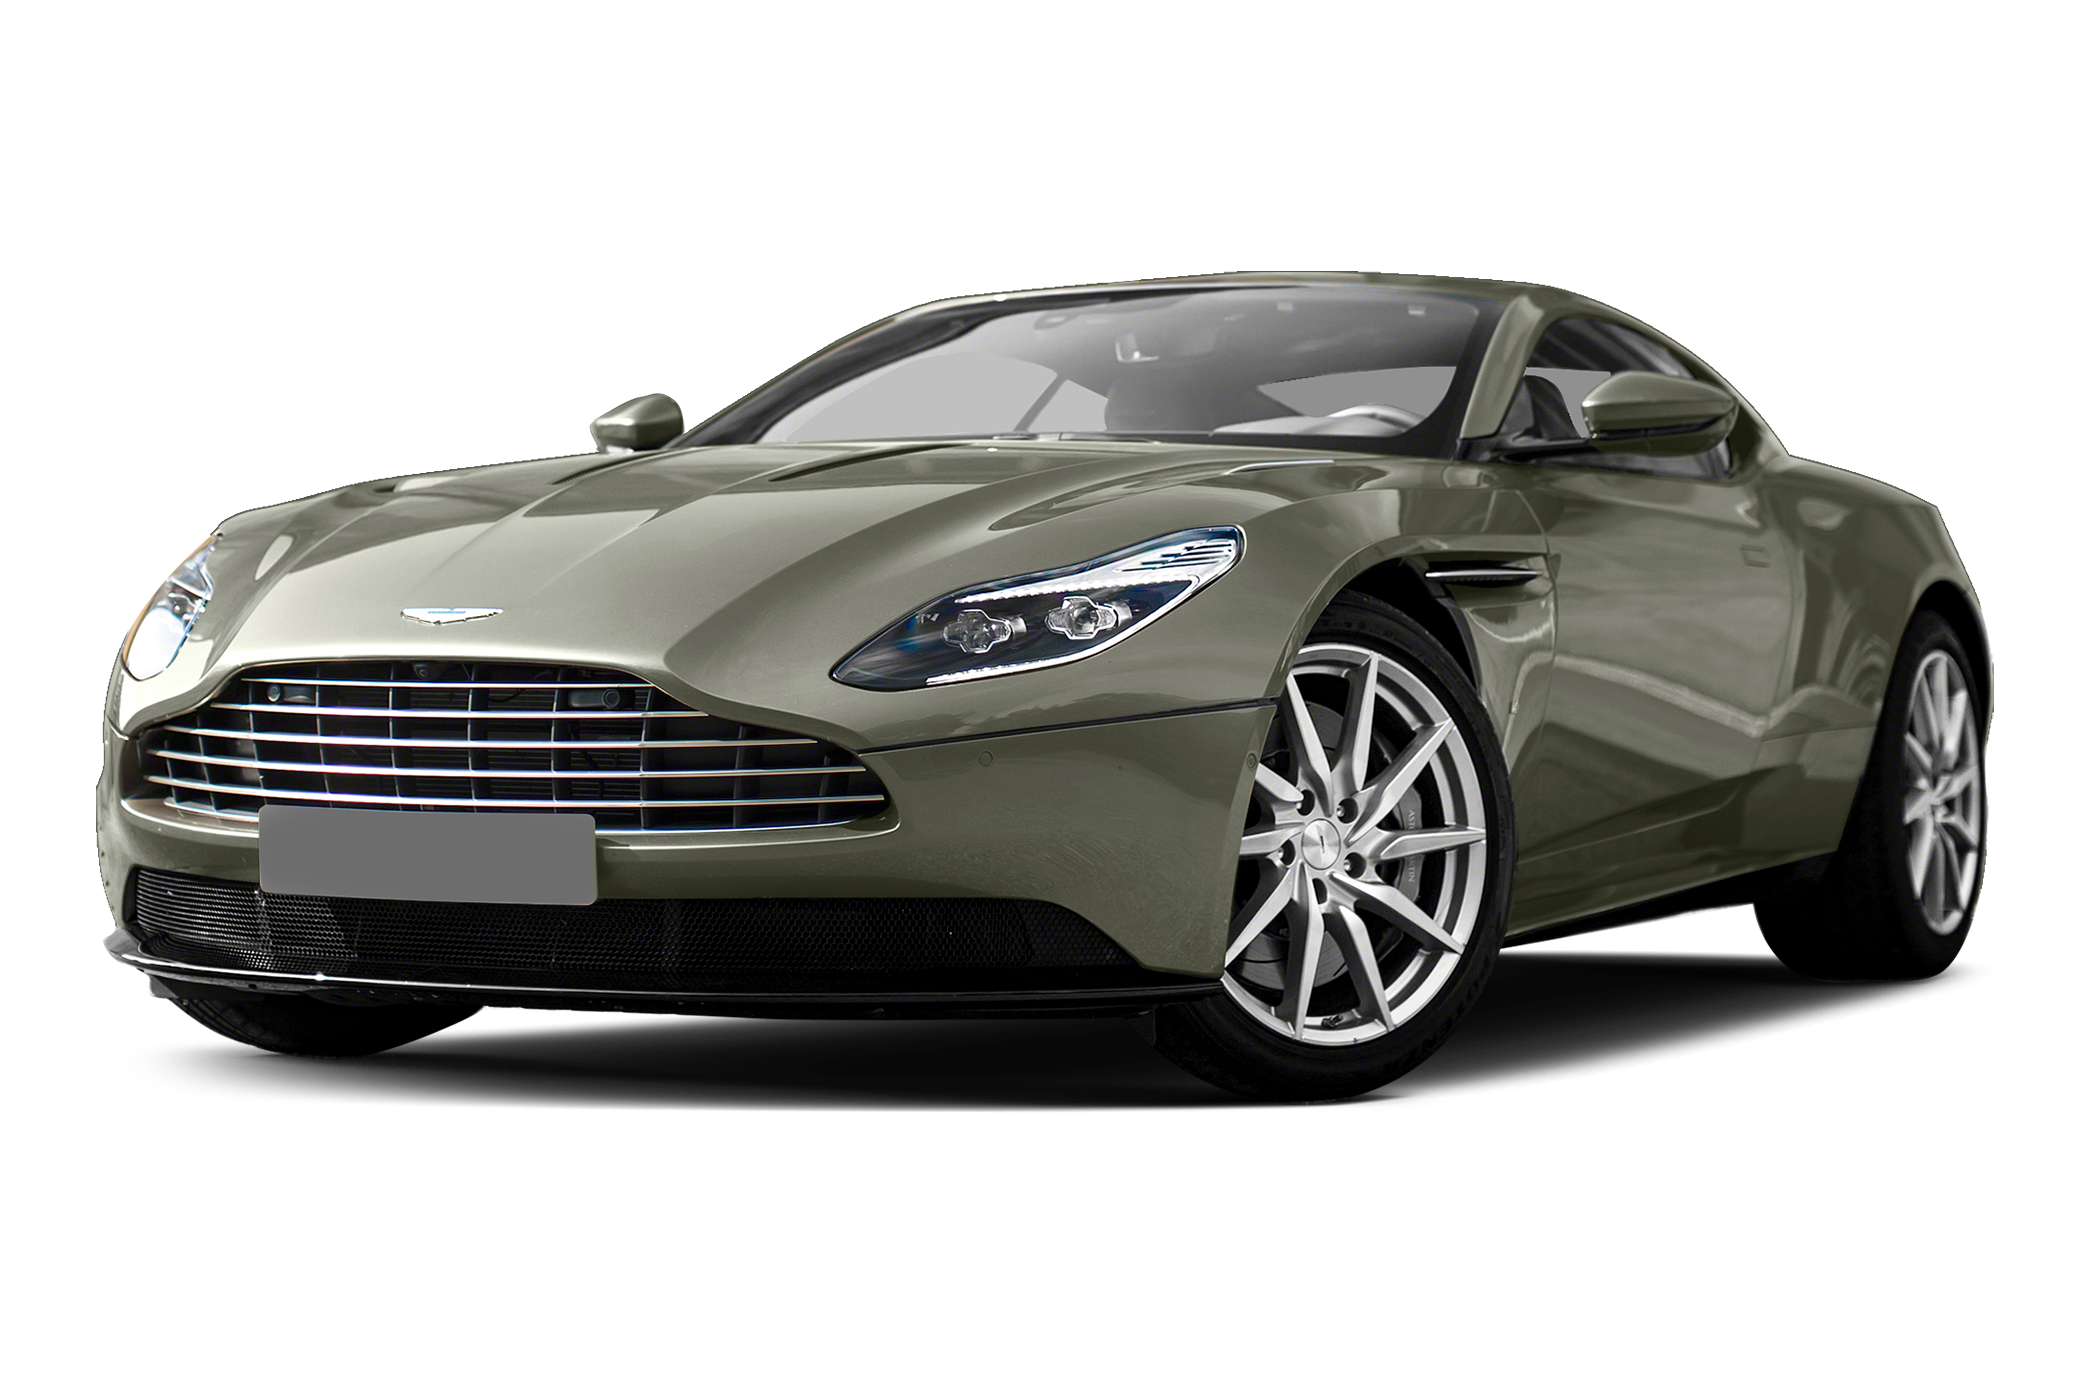 Aston Martin DB11 Price, Images, Mileage, Reviews, Specs